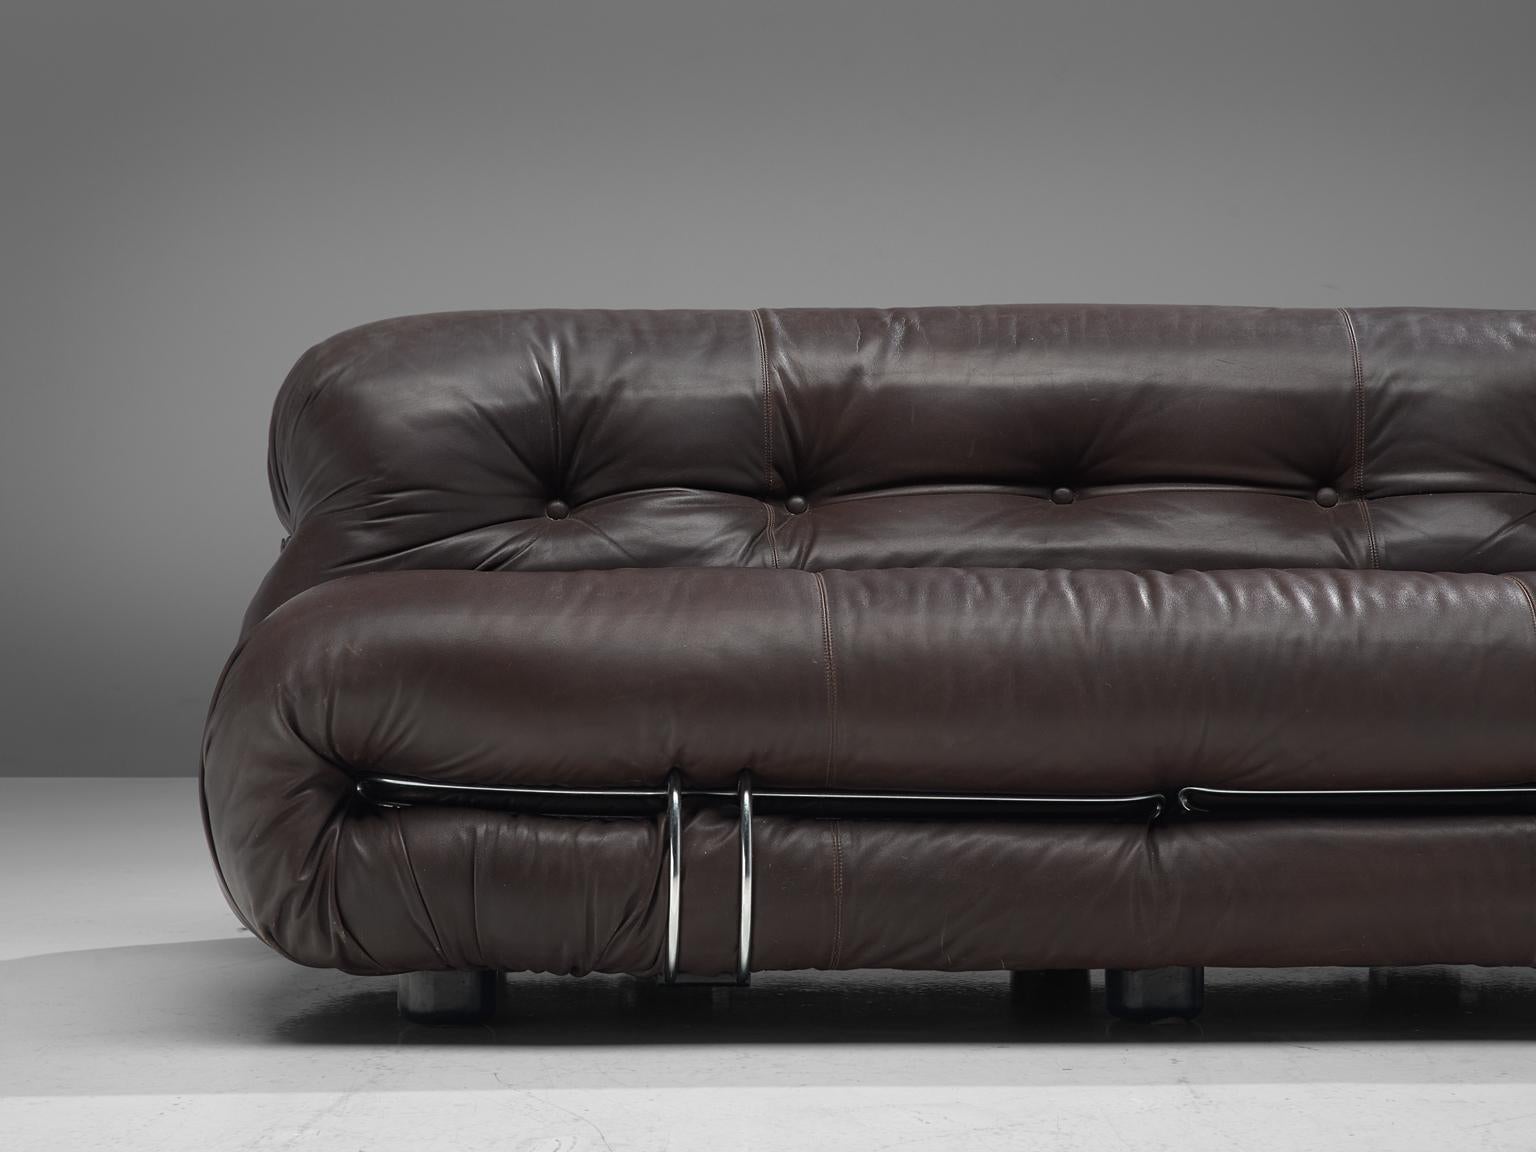 Post-Modern Afra & Tobia Scarpa 'Soriana' Sofa in Chocolate Brown Leather